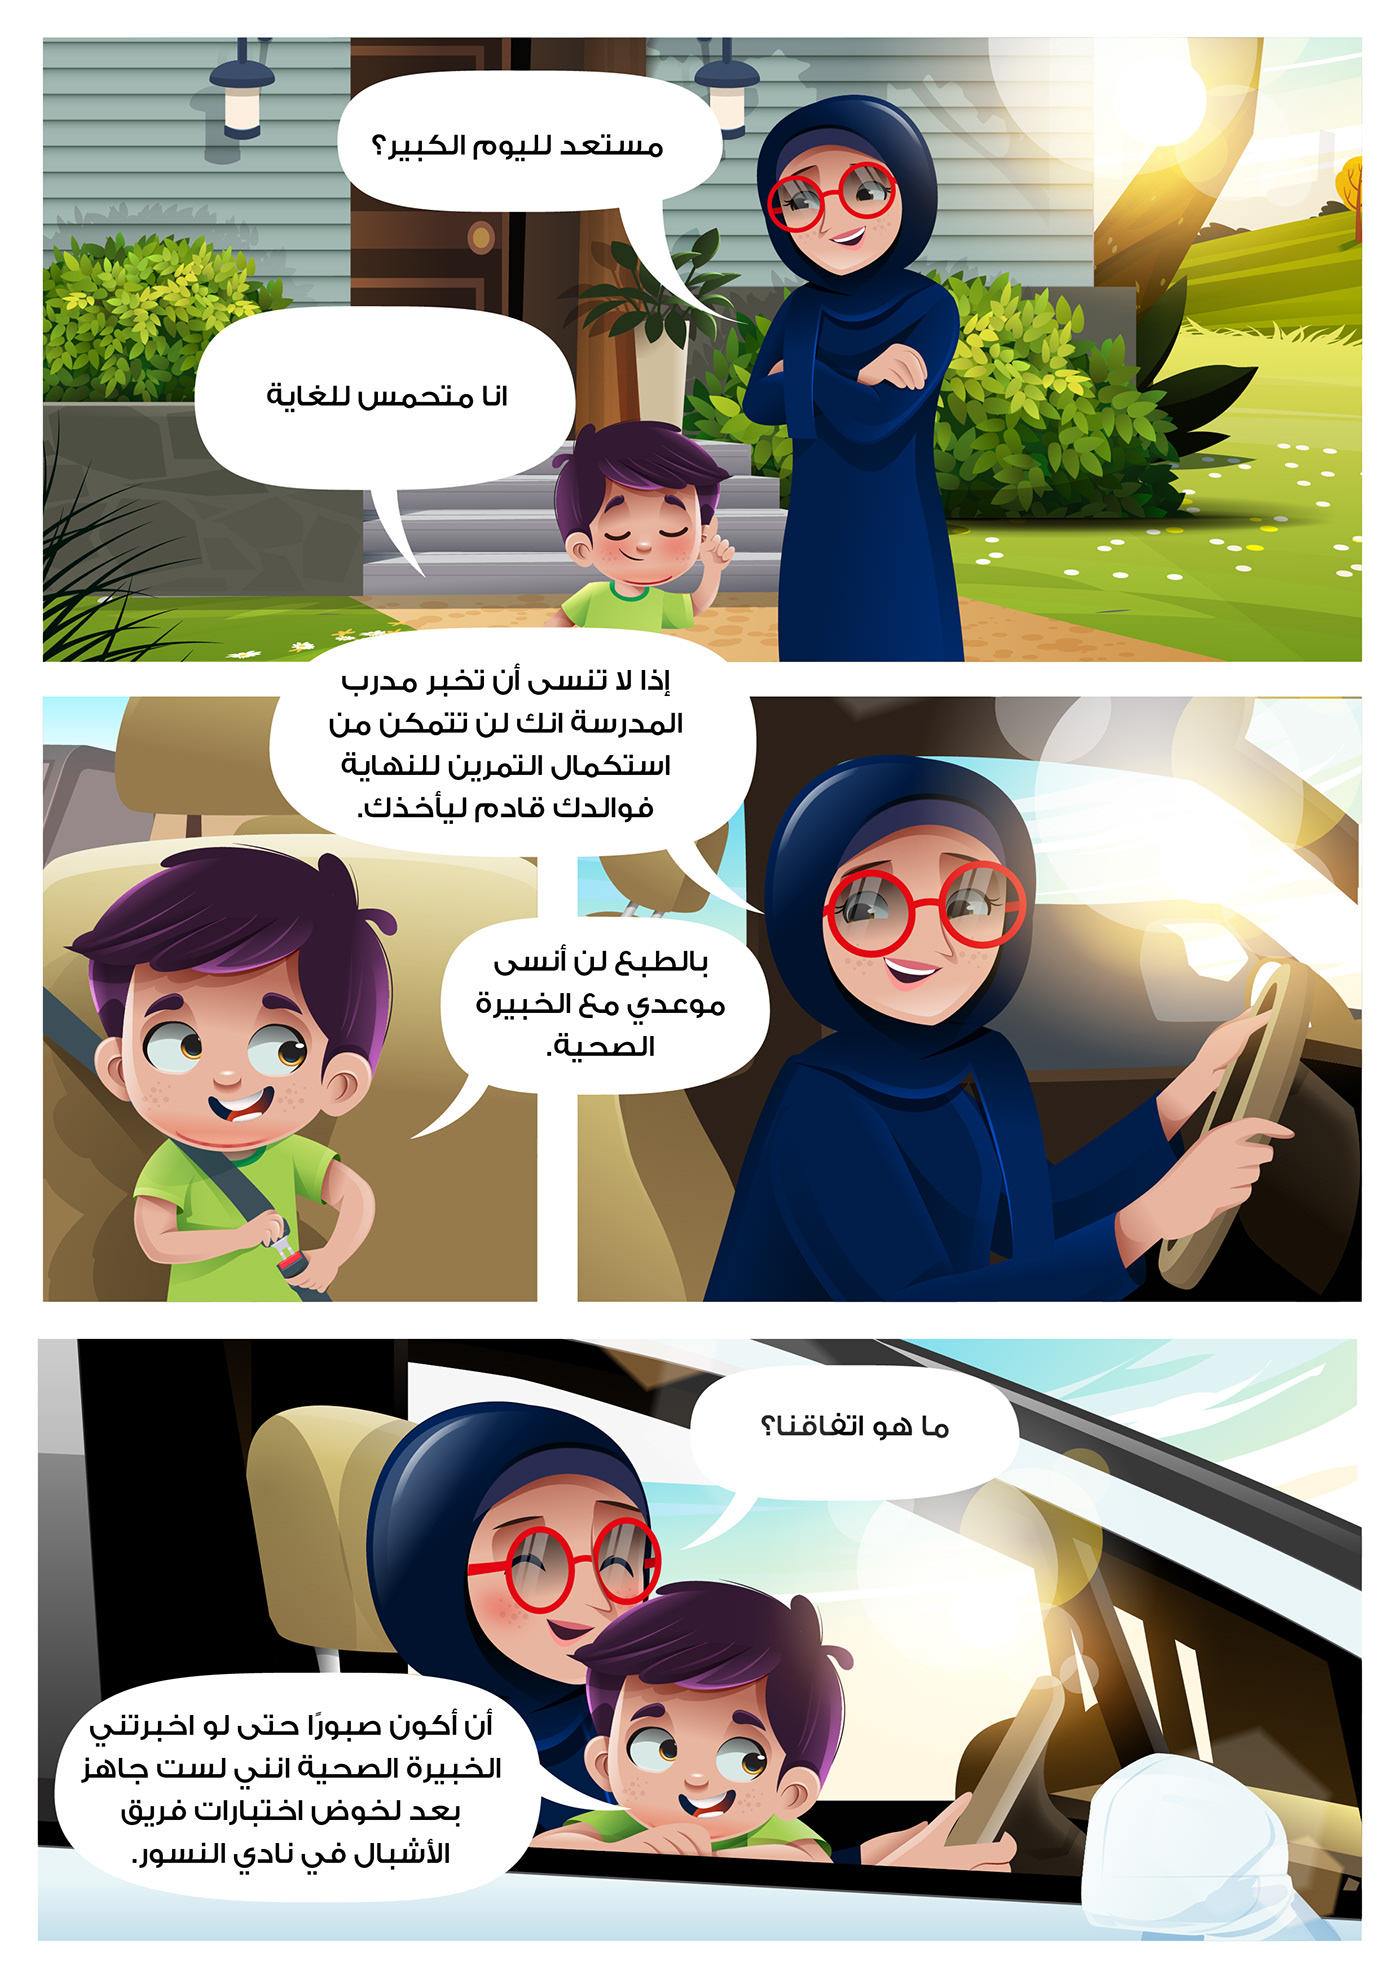 serag basel سراج باسل Arab kids Character design  Saudi Arabia kids story children illustration children's book digital illustration muslim character